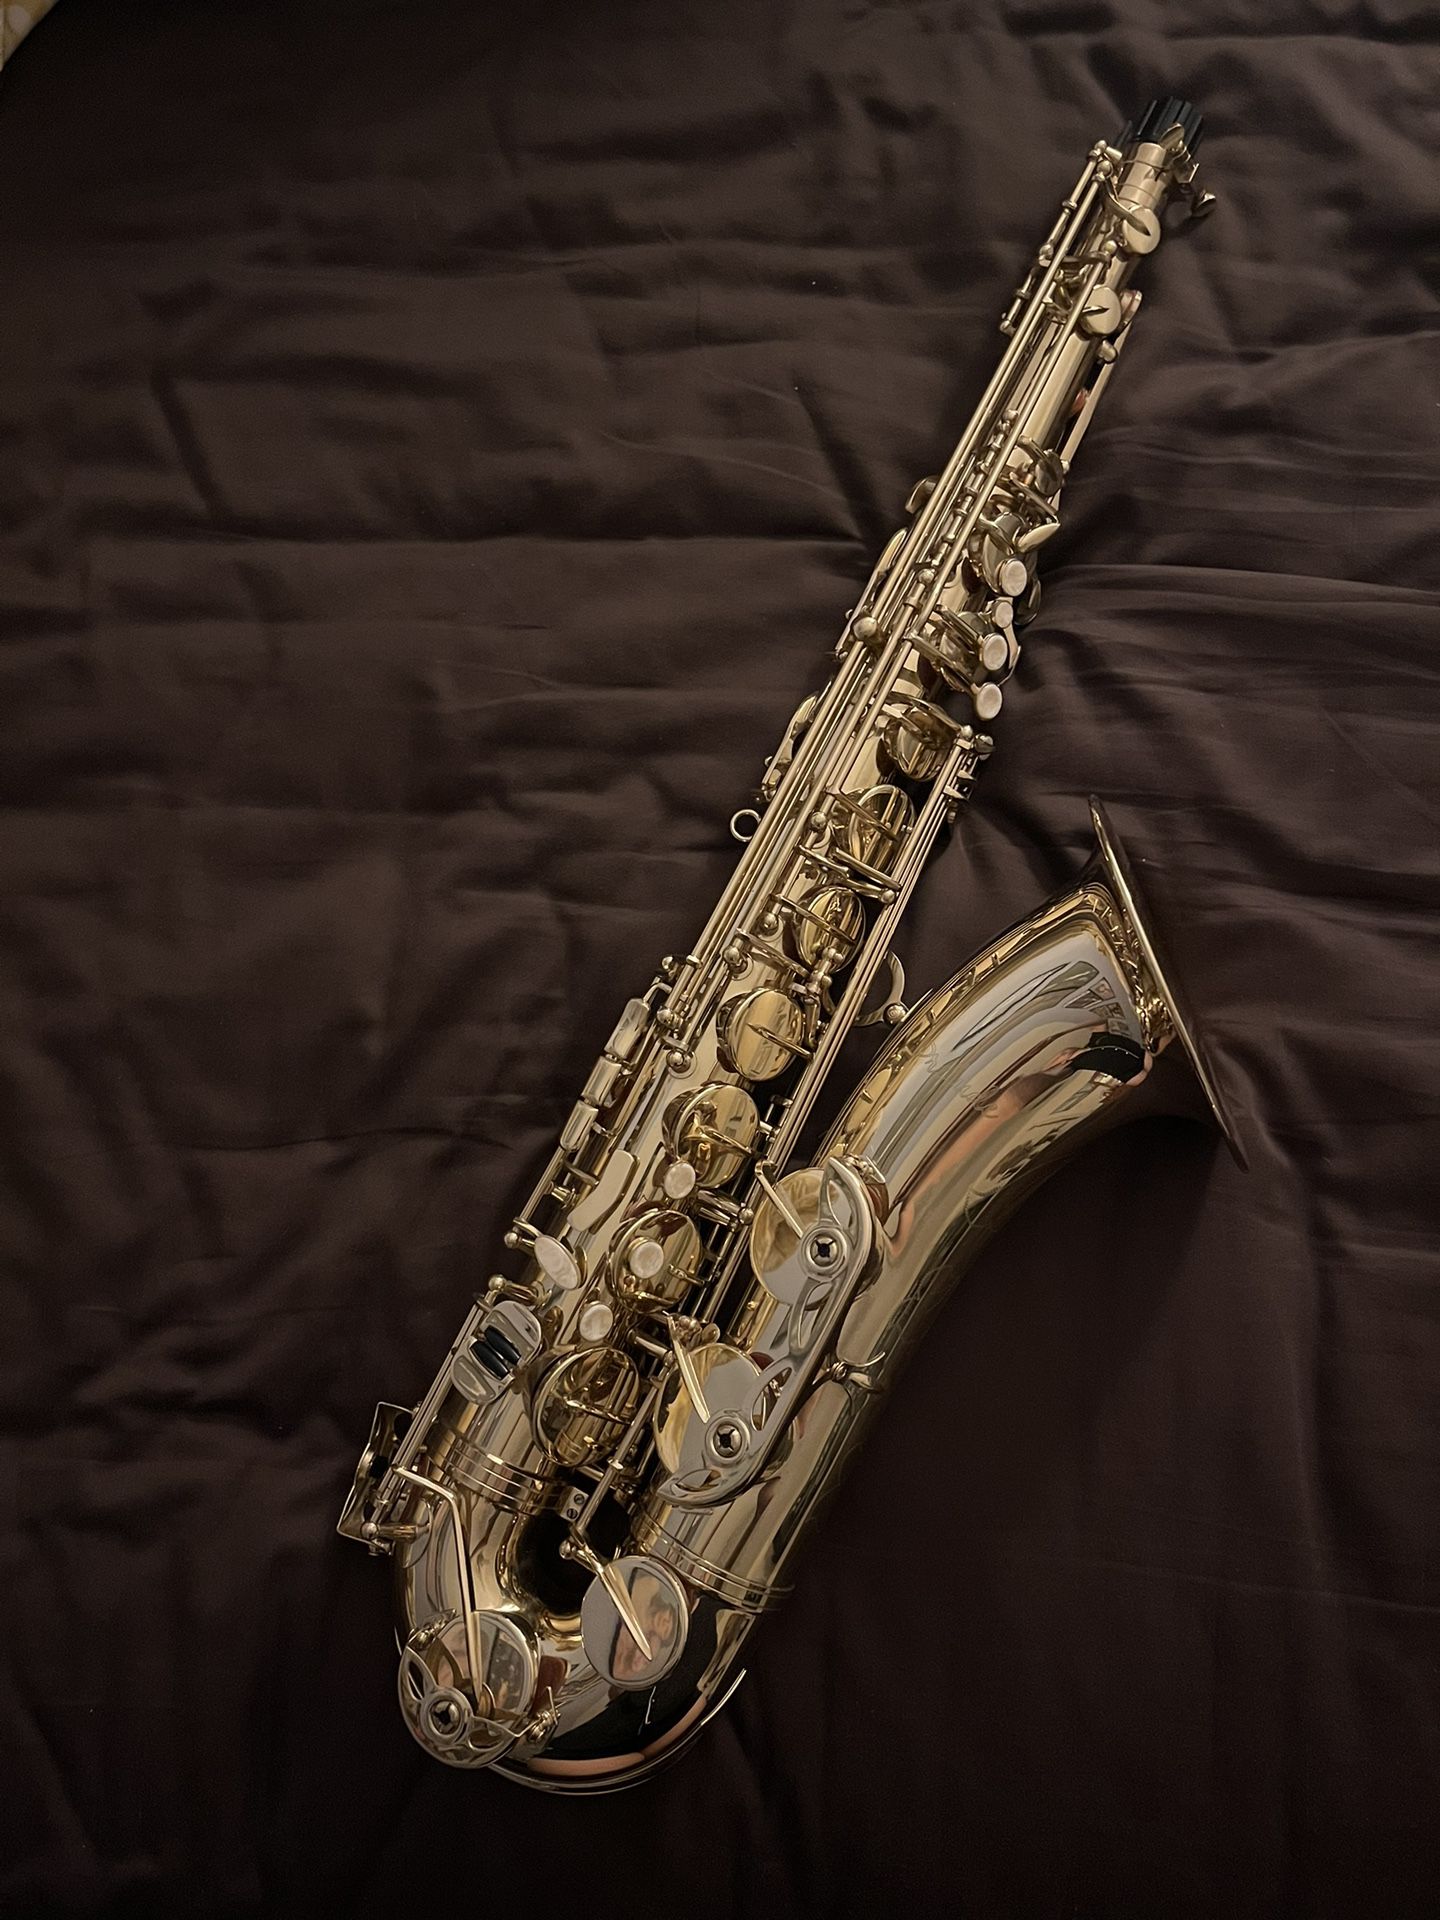 Prelude Tenor Saxophone TS711 by Conn-Selmer